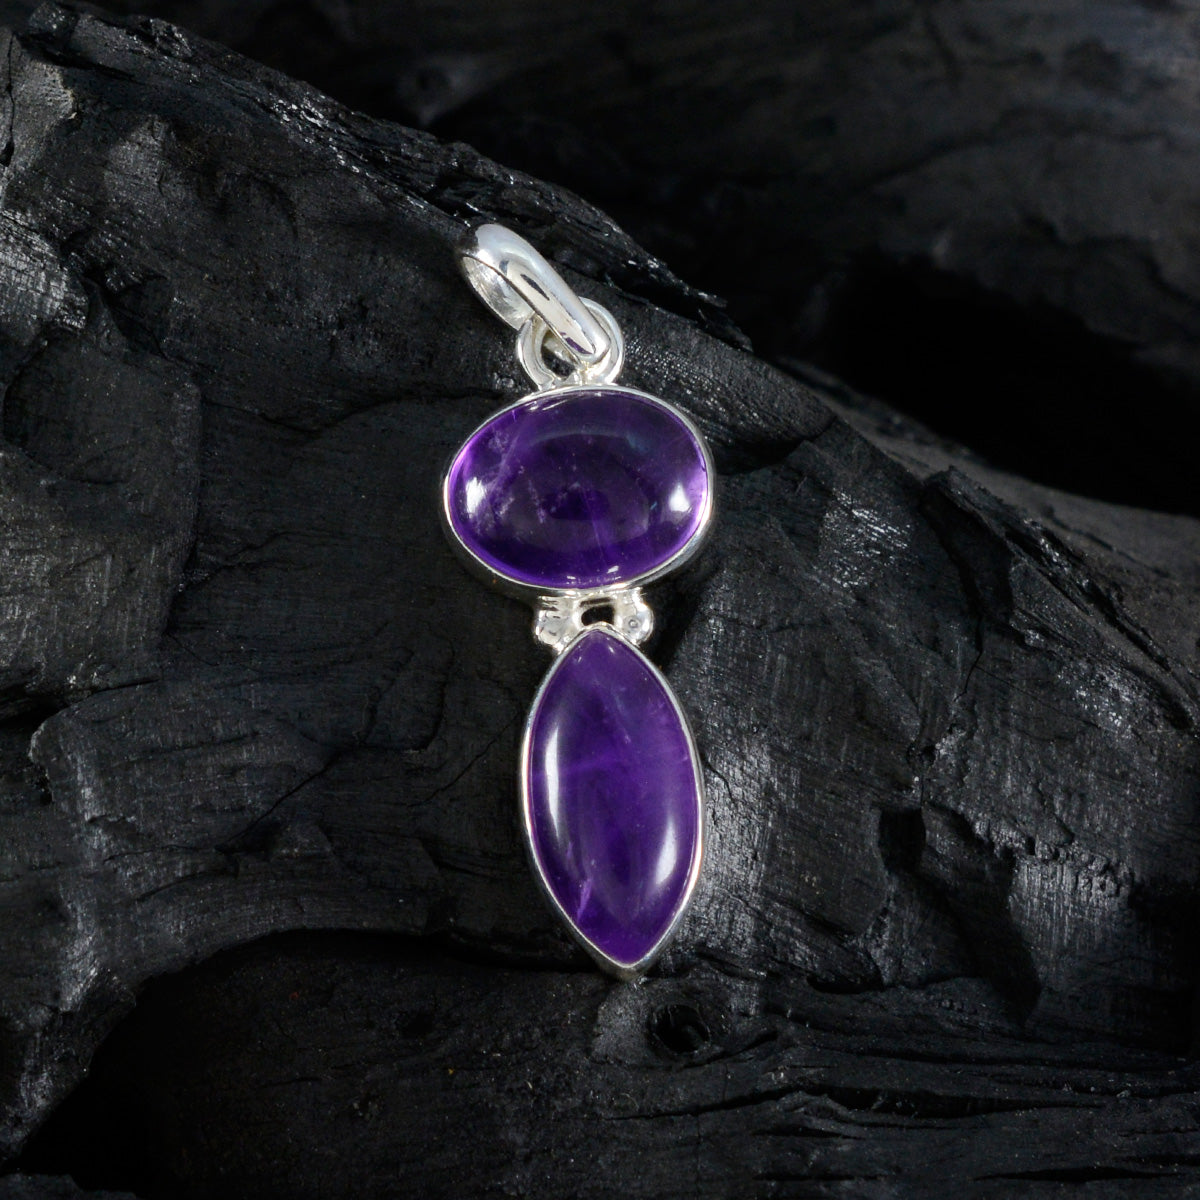 Riyo Bewitching Gemstone Multi Cabochon Purple Amethyst 1095 Sterling Silver Pendant Gift For Teachers Day